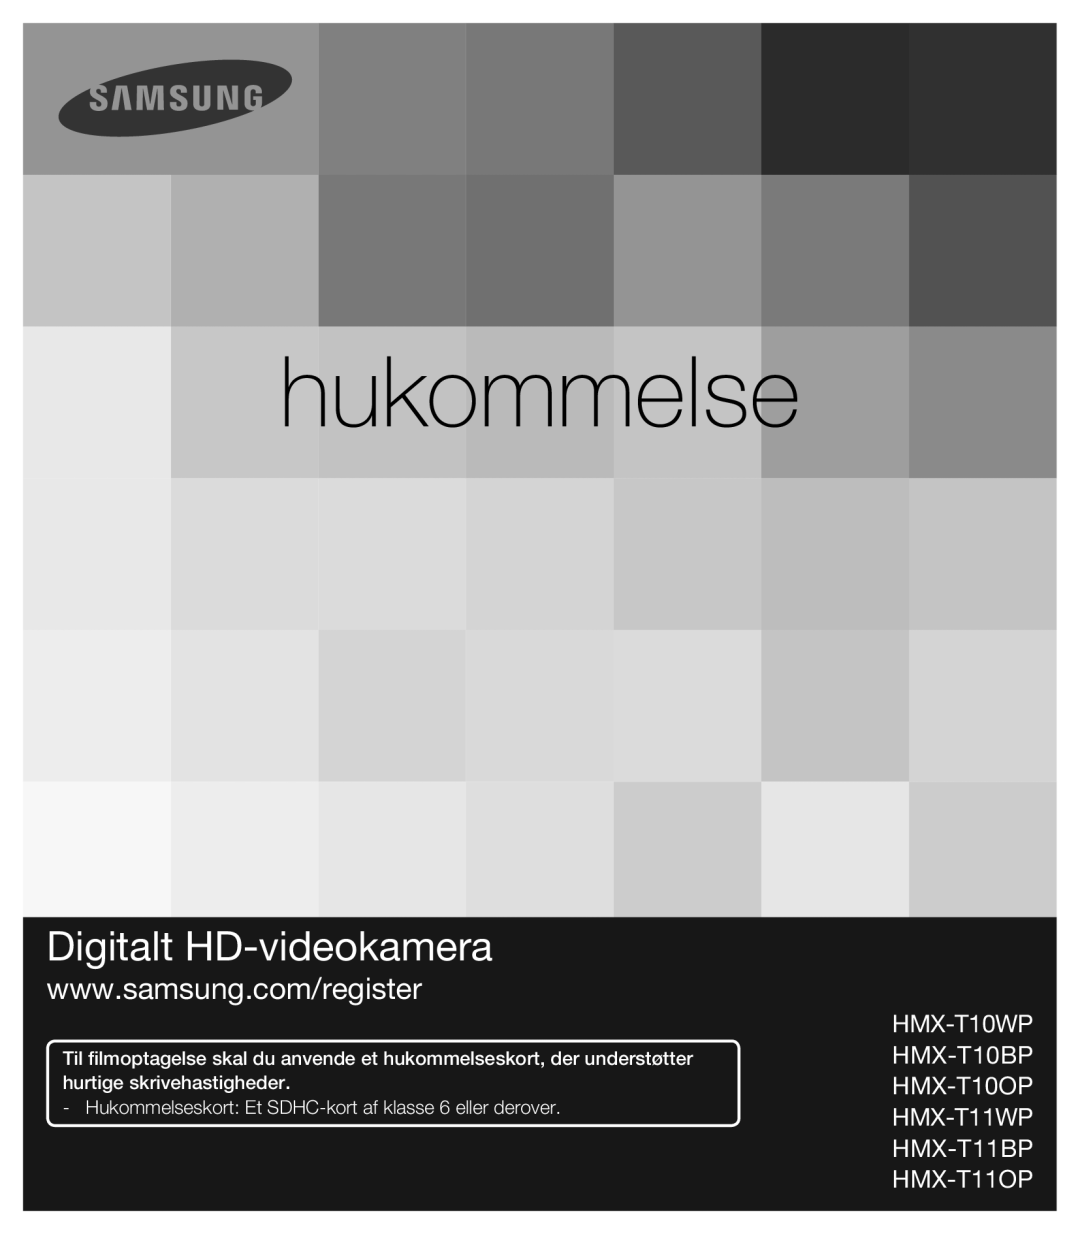 Samsung HMX-T10OP/EDC, HMX-T10WP/EDC, HMX-T10WP/XEU, HMX-T10BP/EDC manual user manual, High Definition Digital Camcorder 